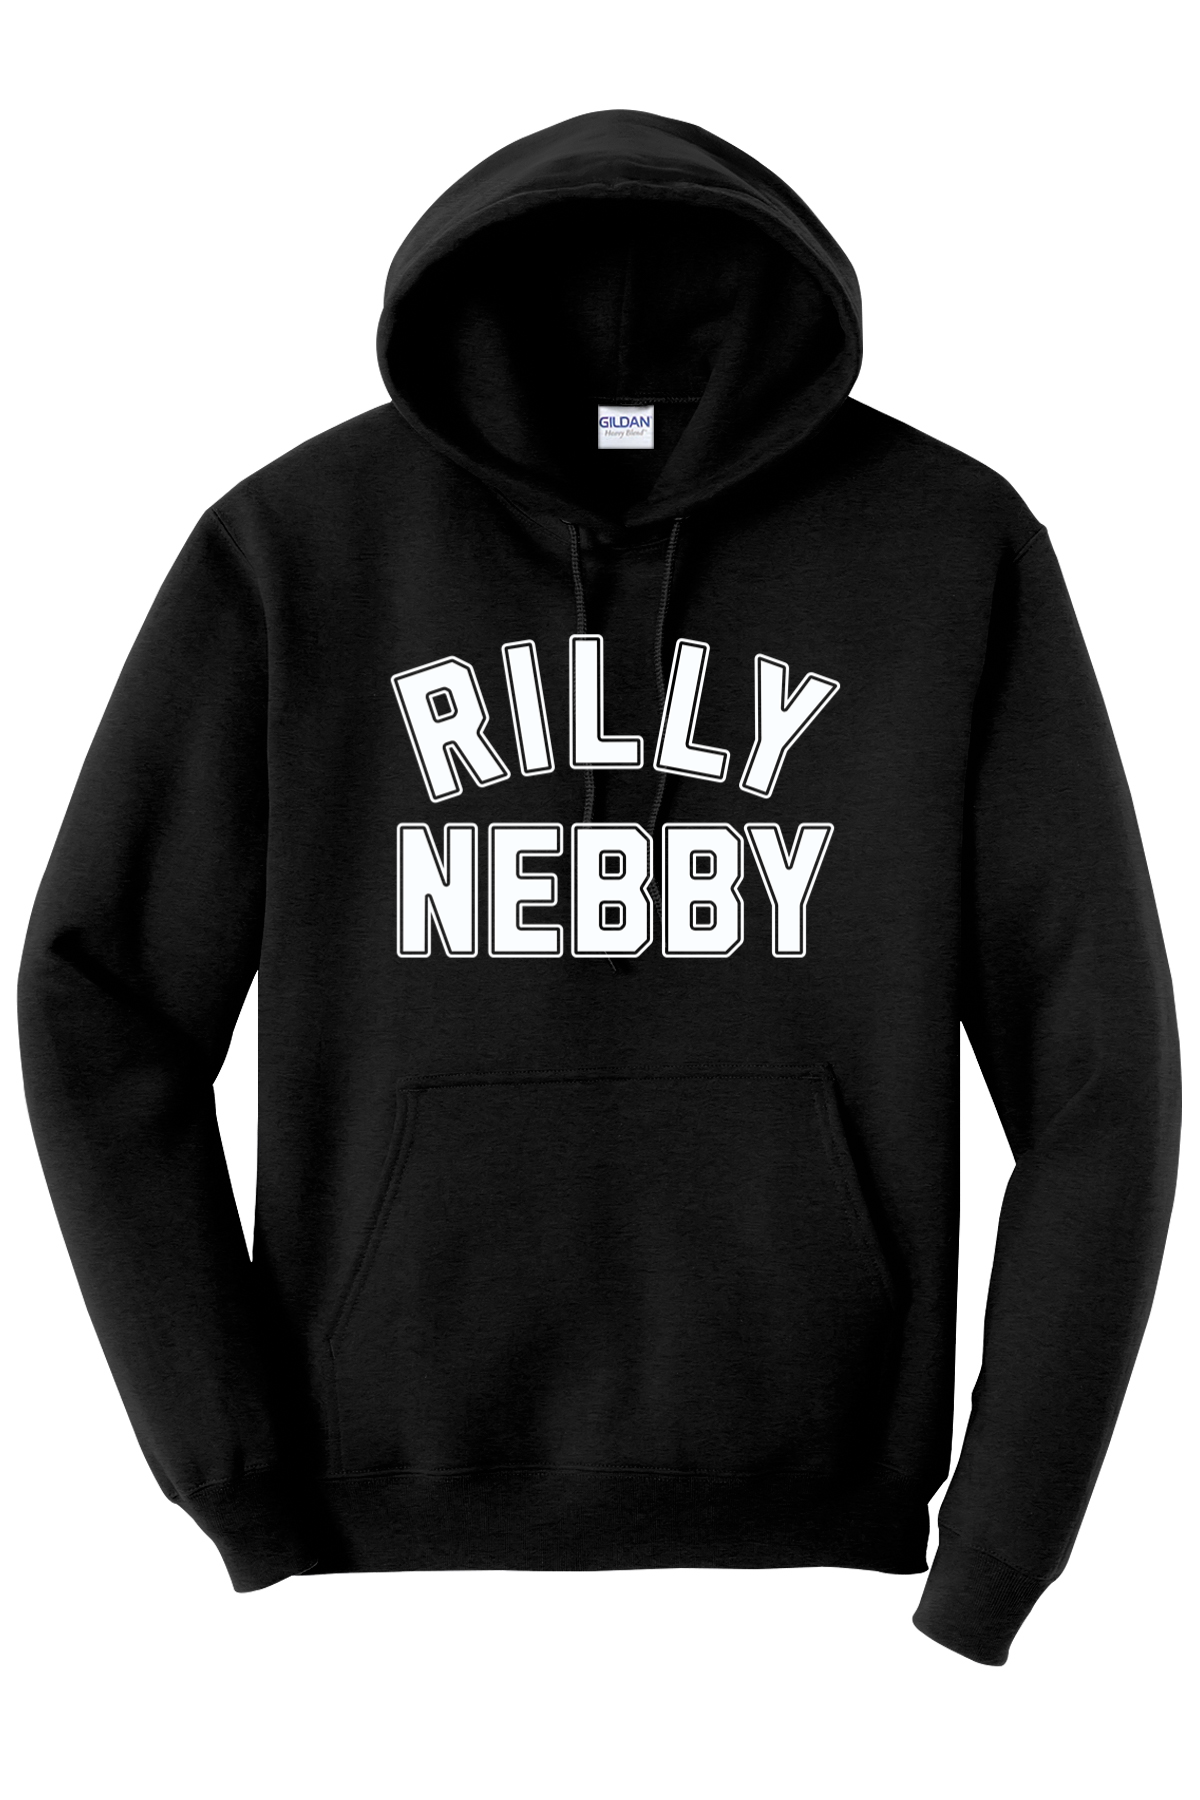 Rilly Nebby - Hoodie - Yinzylvania